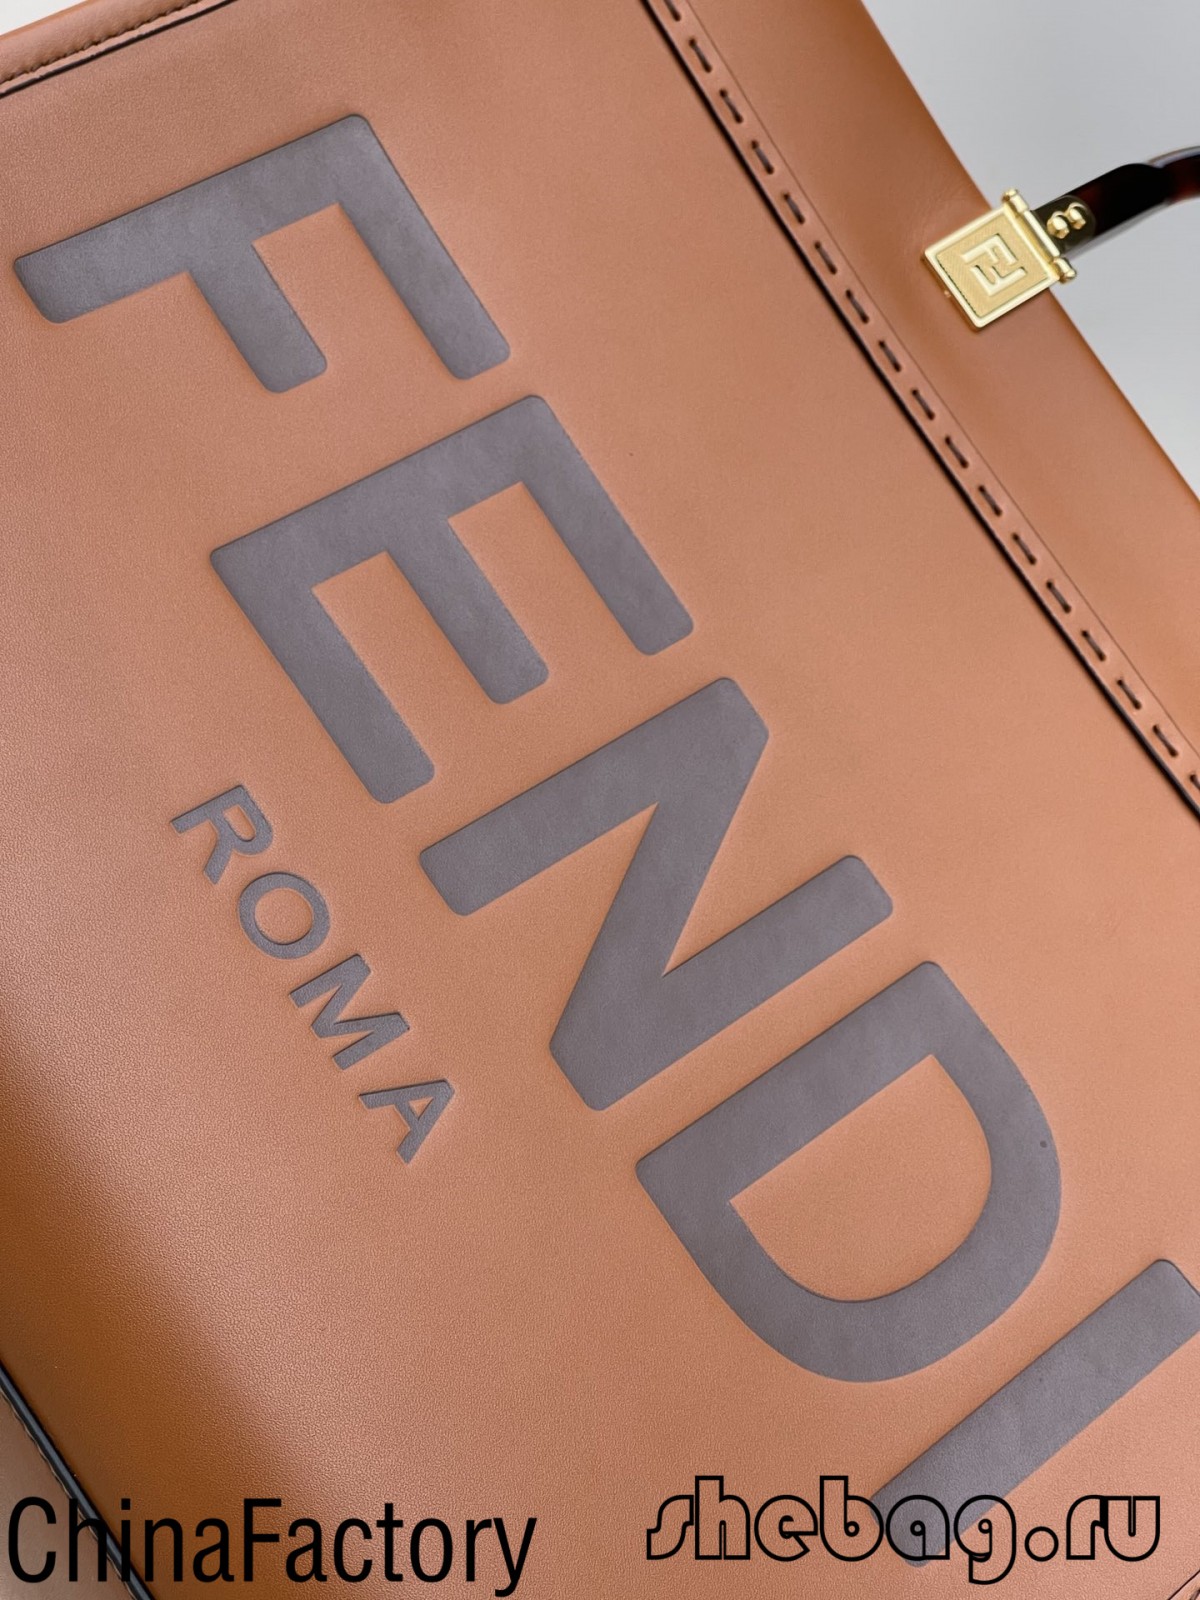 Fendi tote bag replica online sellers compare: Fendi Sunshine (2022 Hottest)-Best Quality Fake Louis Vuitton Bag Online Store, Replica designer bag ru